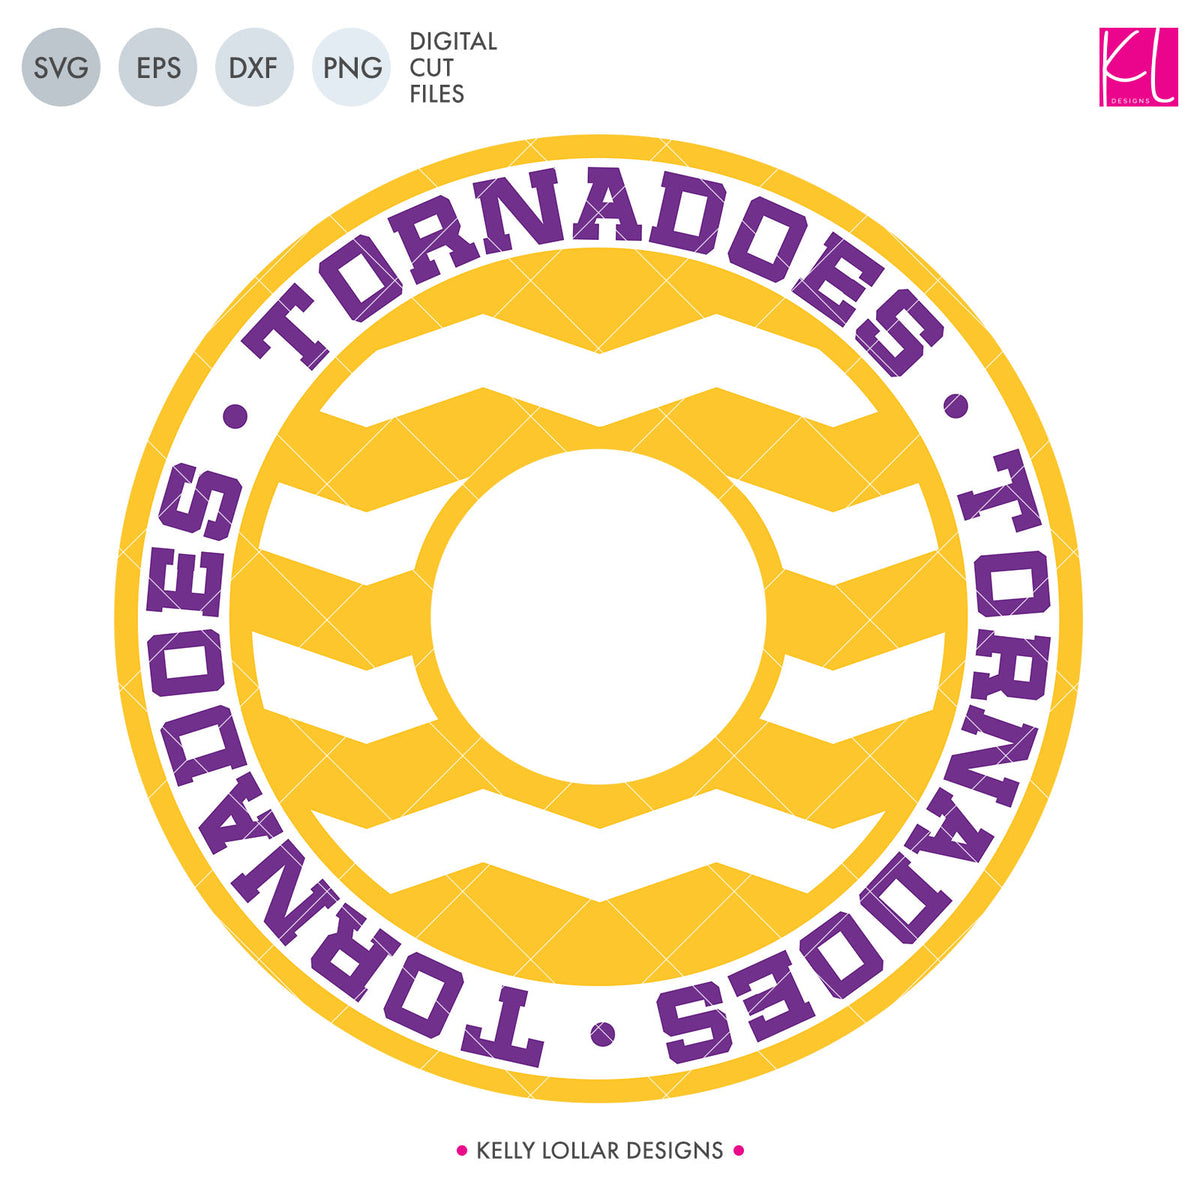 Tornadoes Mascot Bundle | SVG DXF EPS PNG Cut Files